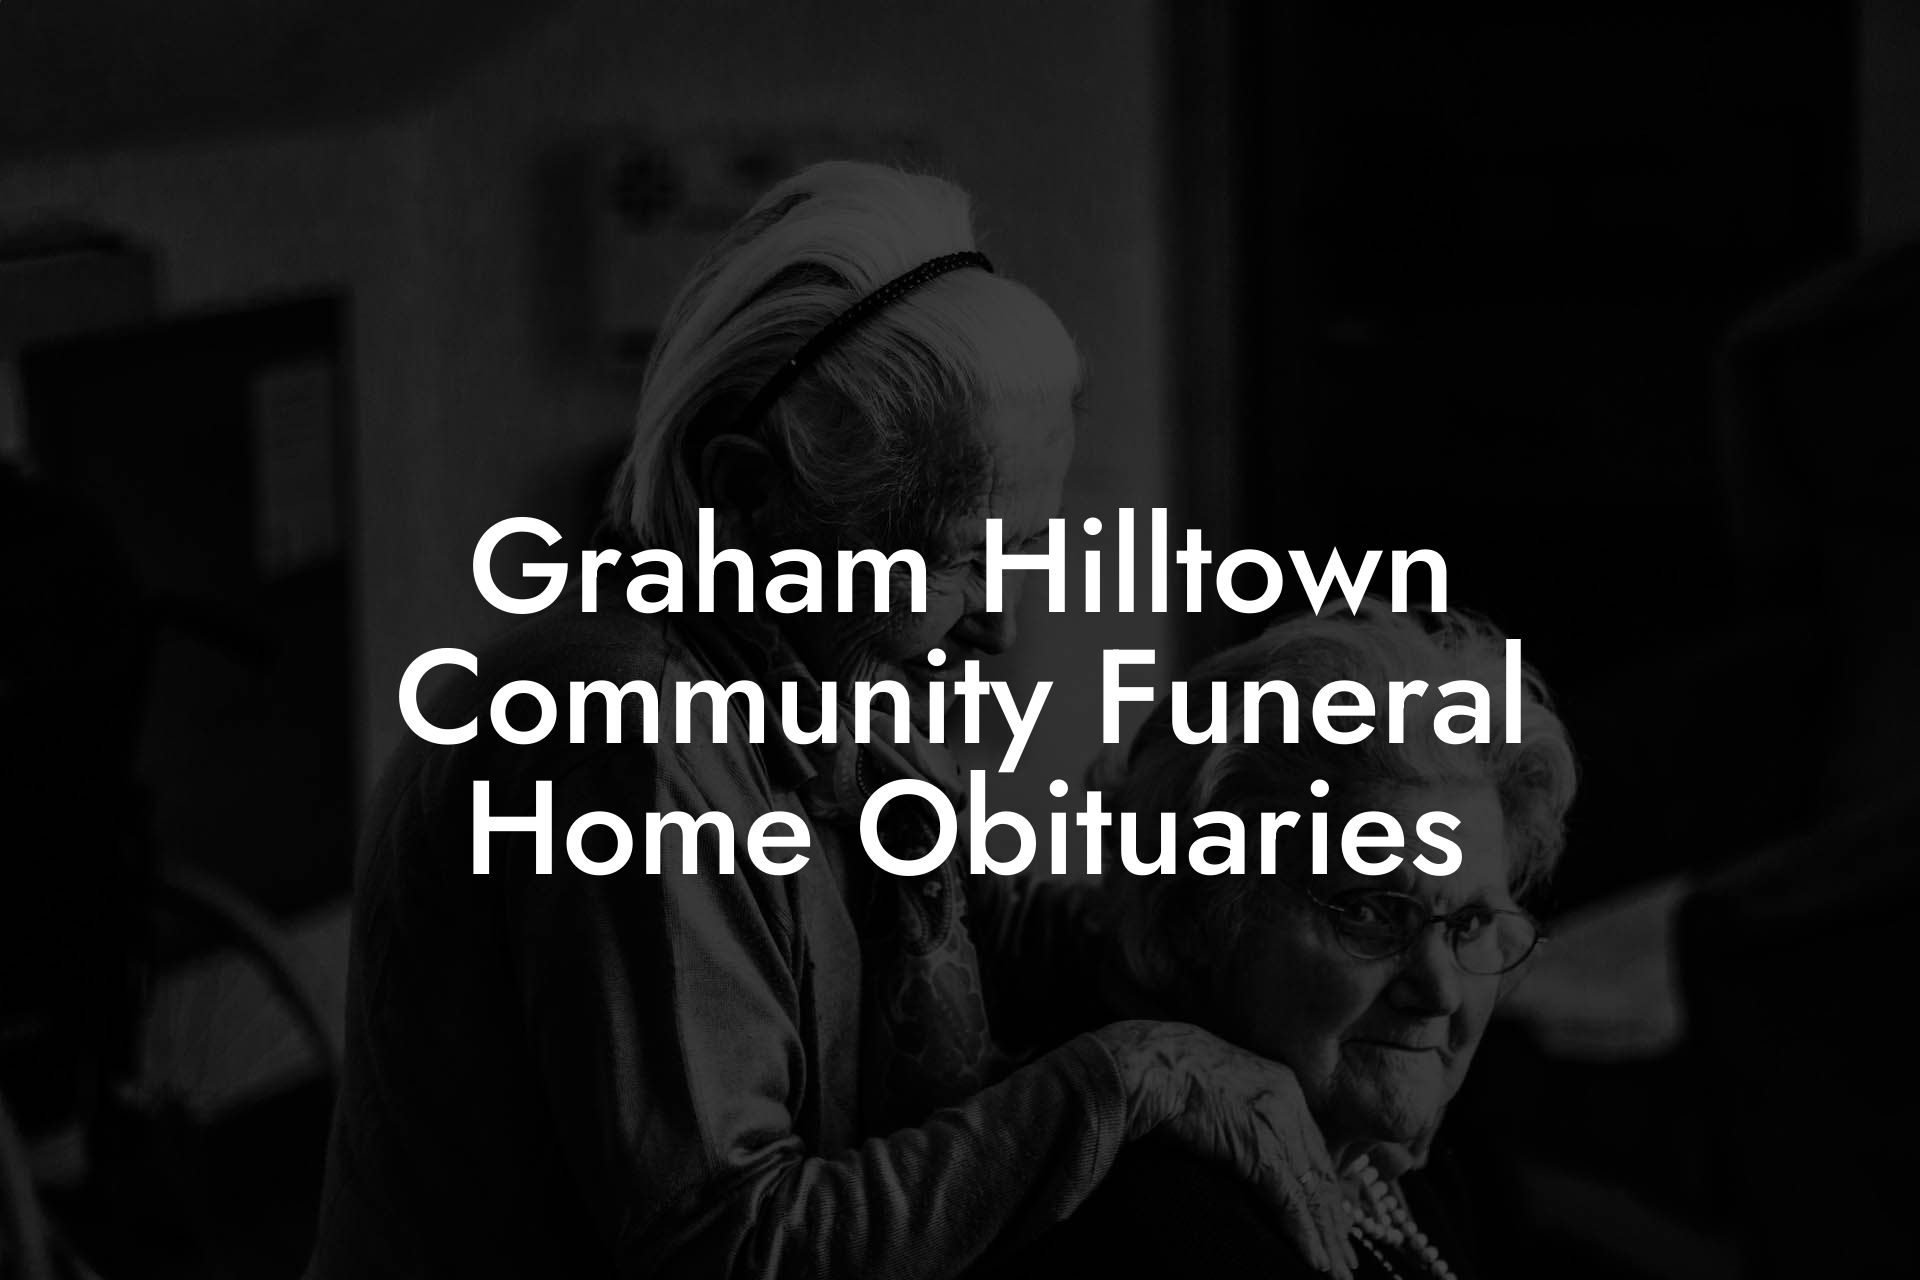 Graham Hilltown Community Funeral Home Obituaries